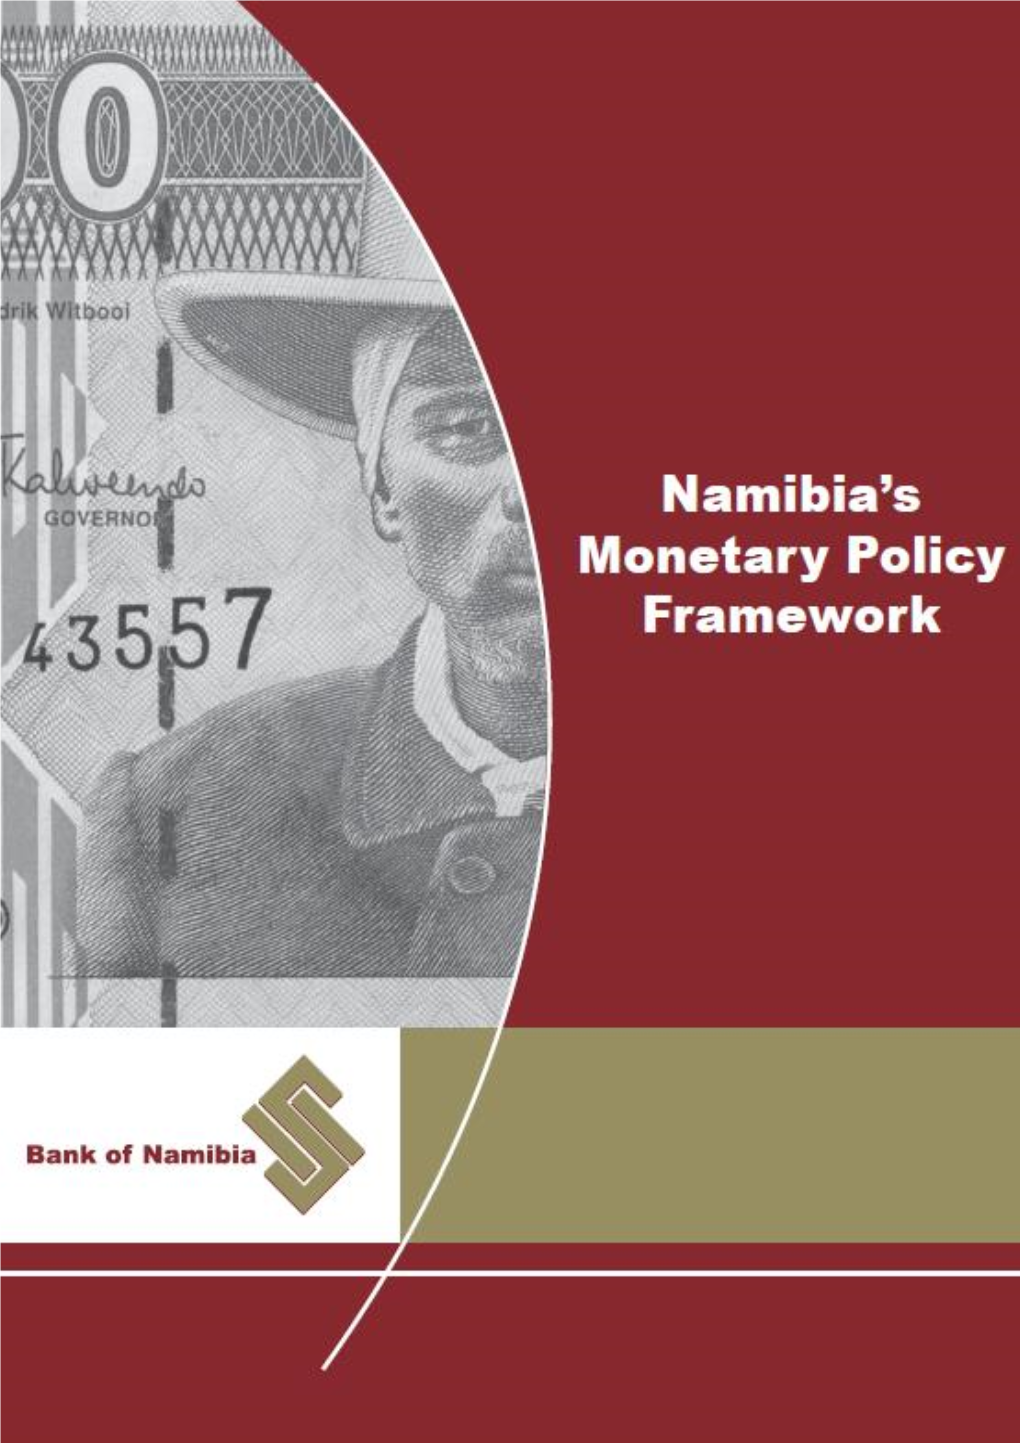 Bank of Namibia, 2020